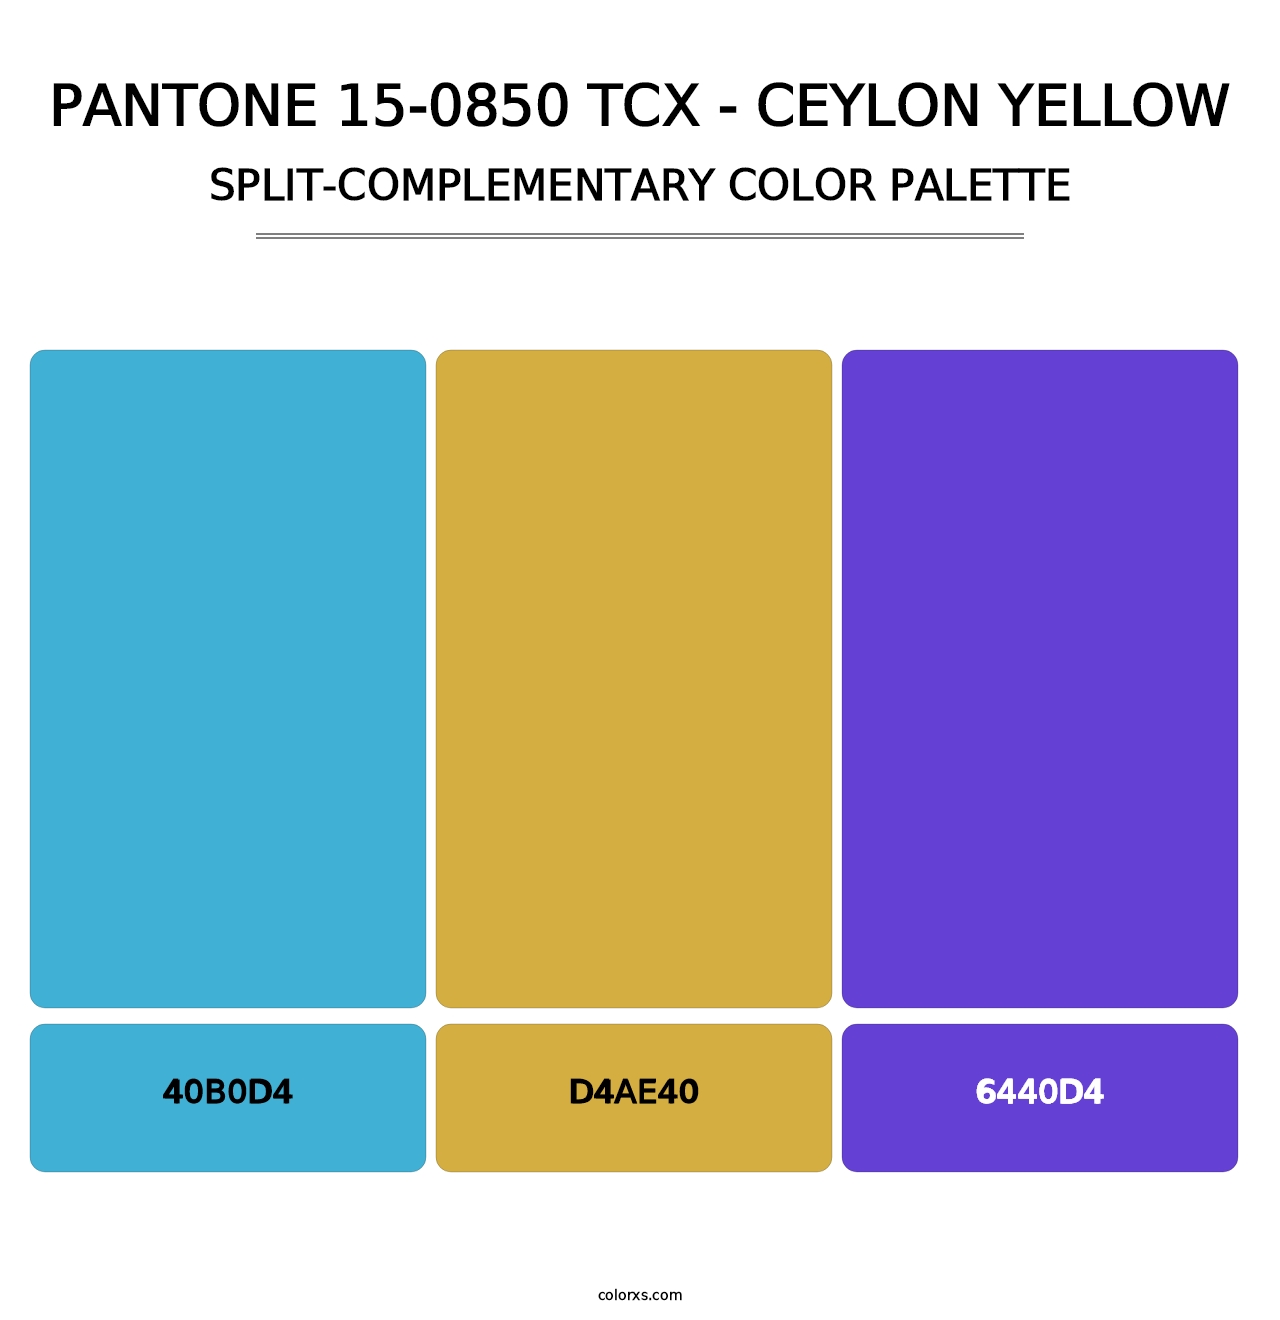 PANTONE 15-0850 TCX - Ceylon Yellow - Split-Complementary Color Palette